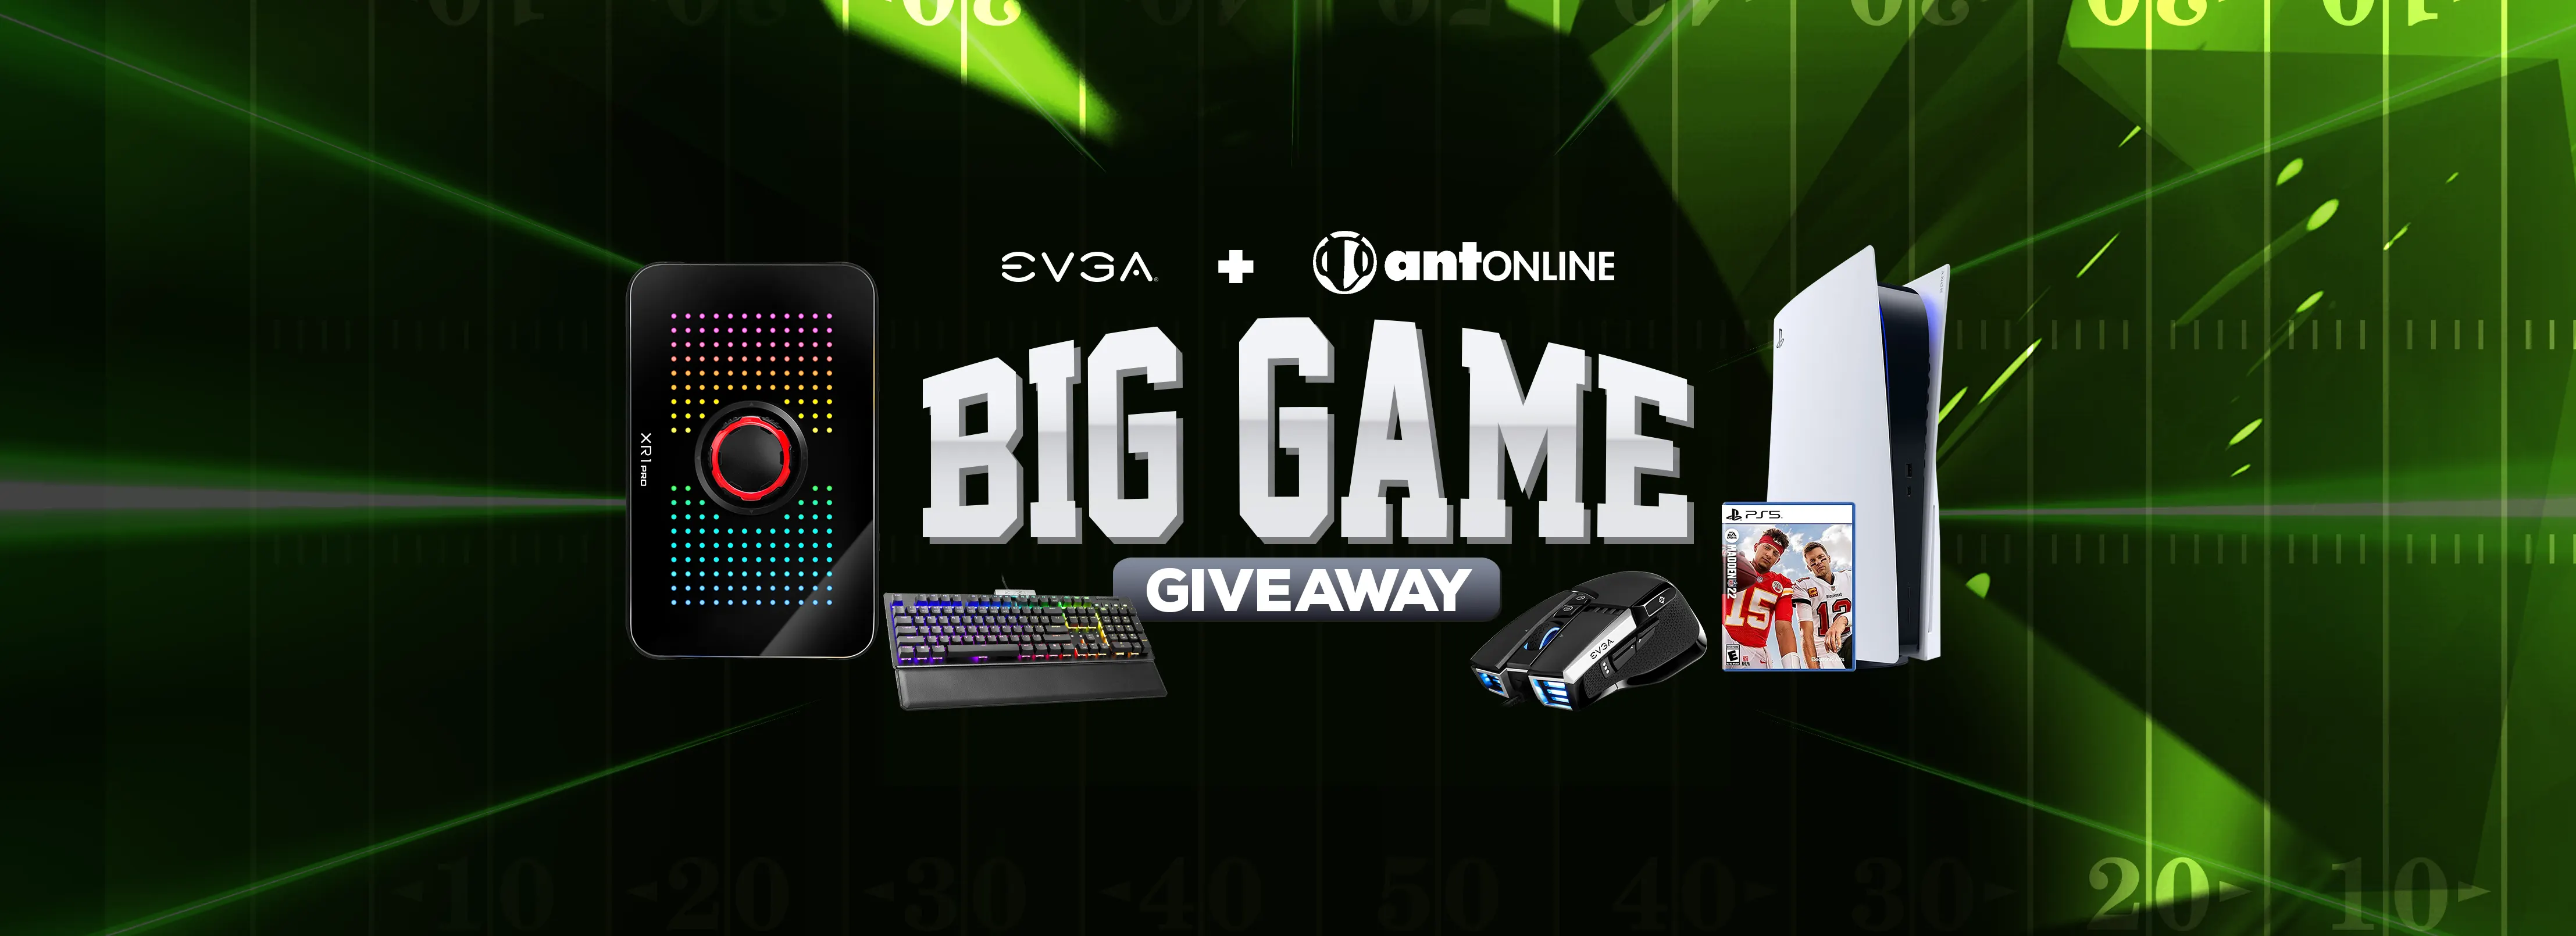 EVGA + ANTONLINE Big Game Giveaway